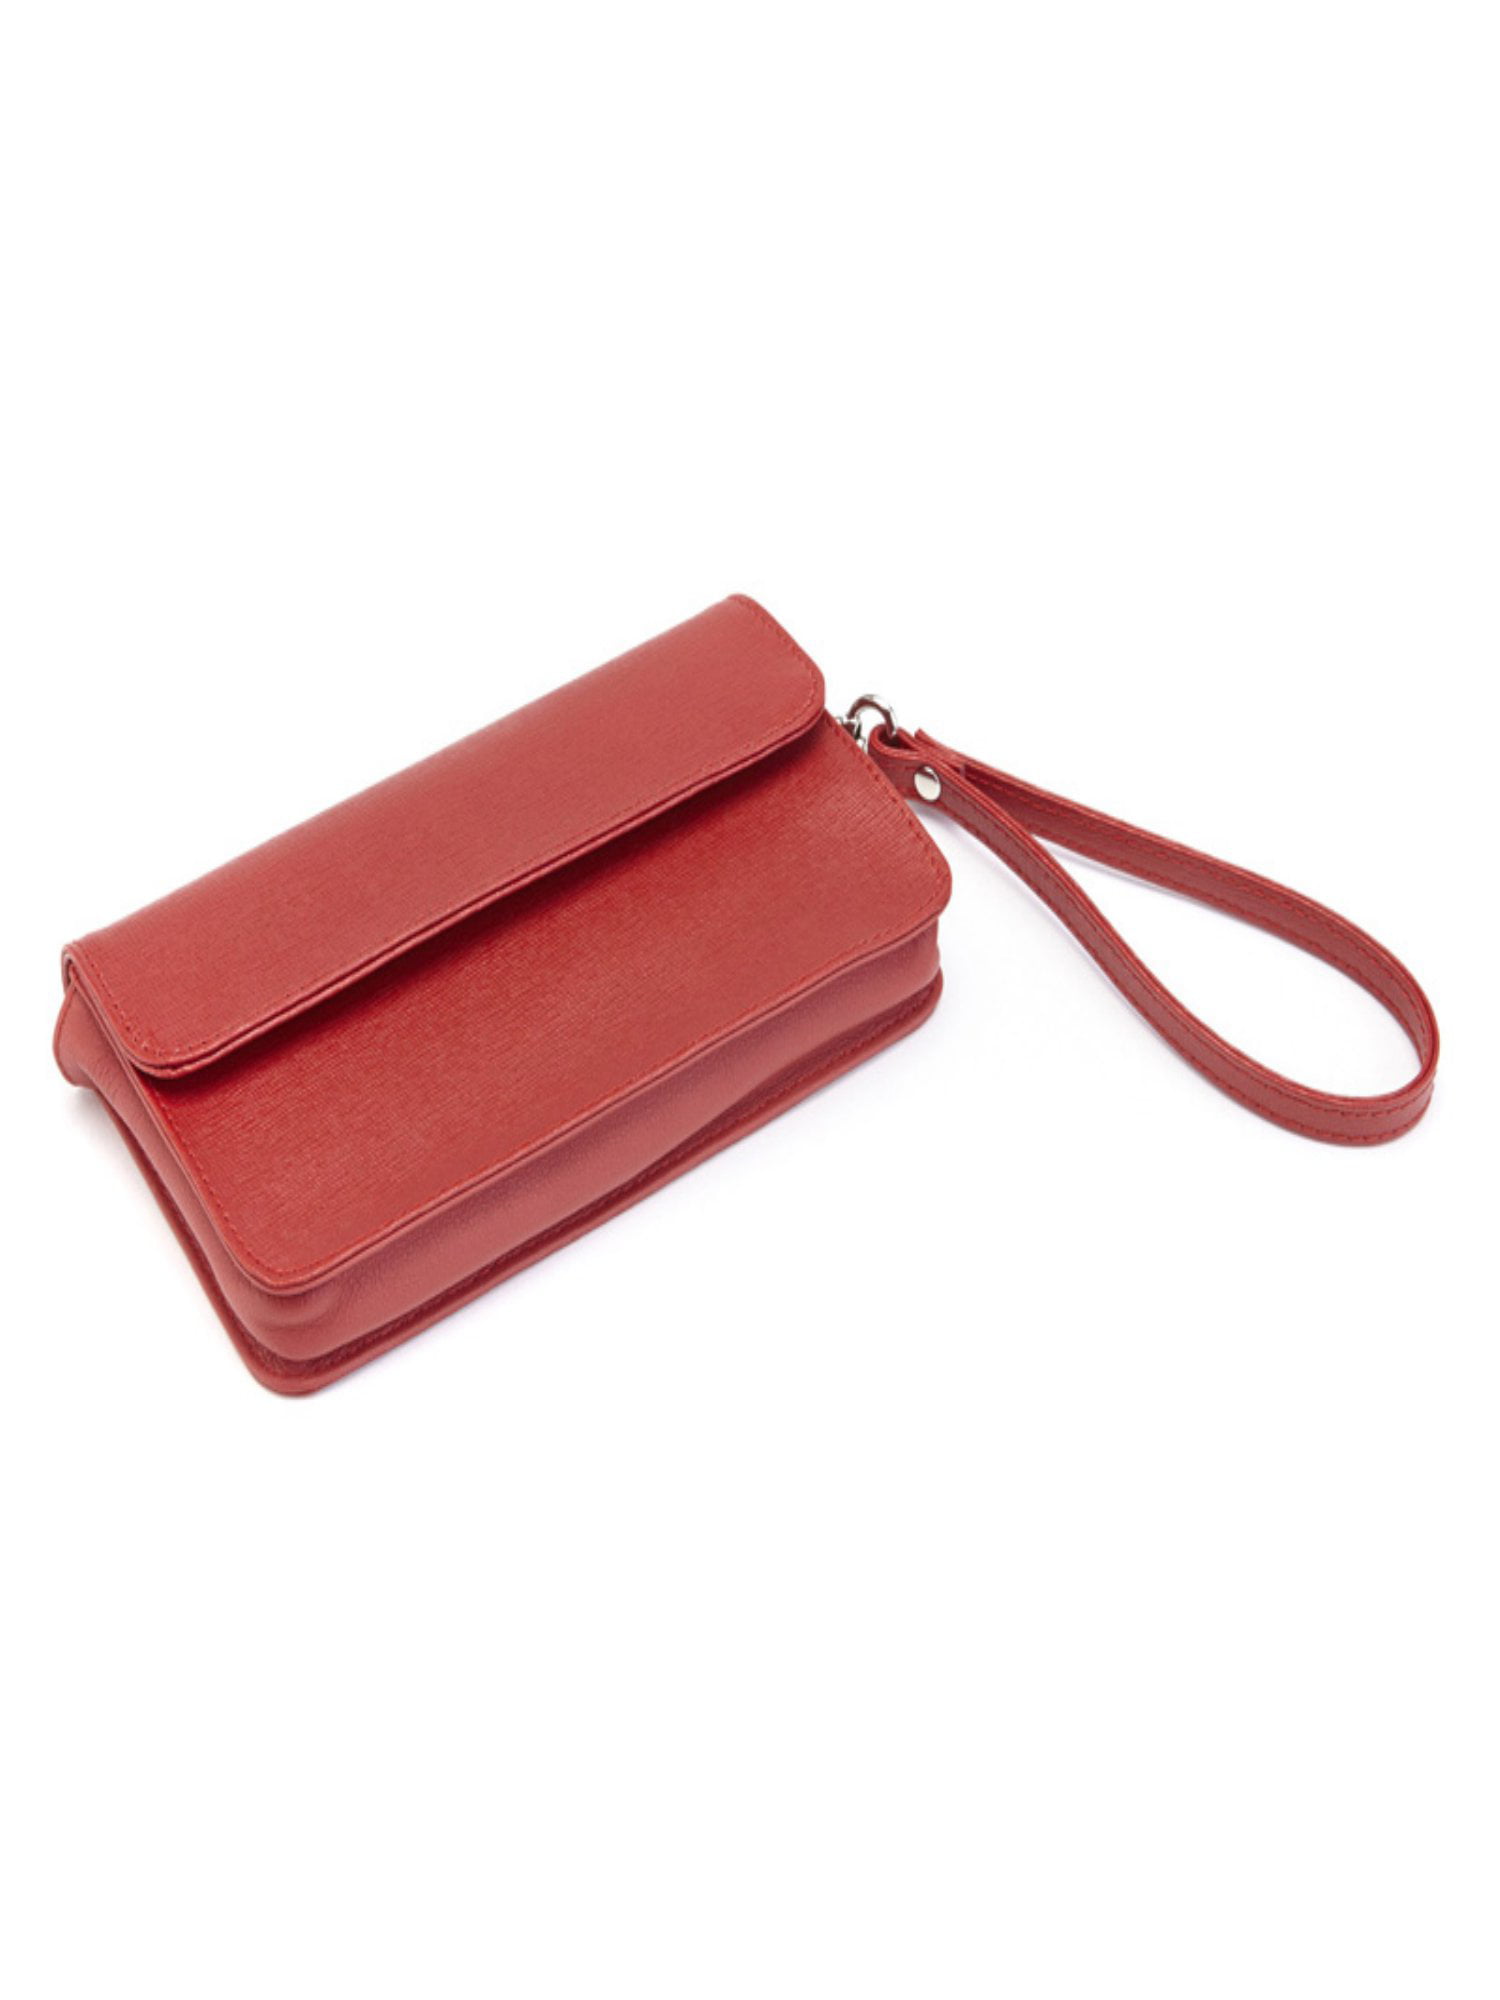 Womens Zip Around Wallet and Phone Clutch,Travel Purse Leather Clutch Bag Card Holder Organizer Wristlets Wallets,Trendy Scandinavian